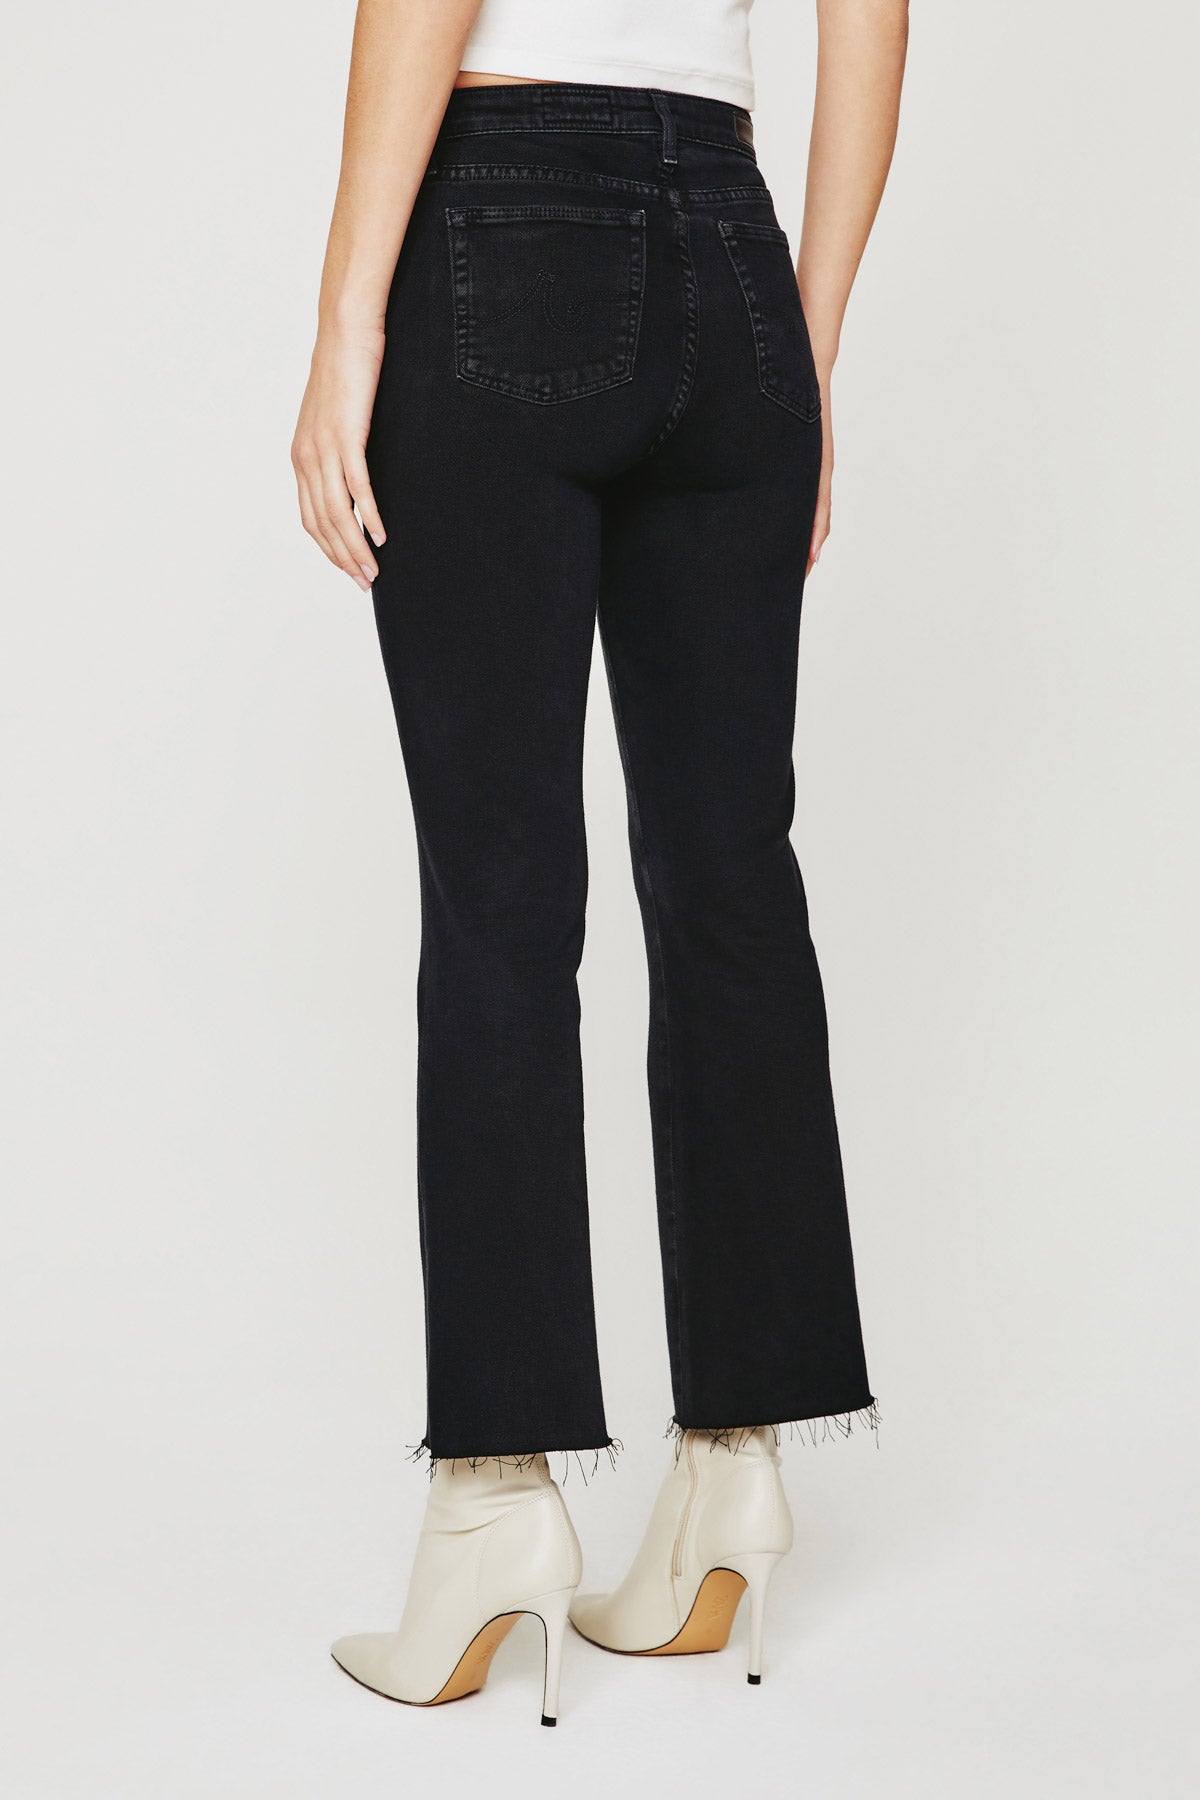 Farrah Boot Crop by AG Jeans